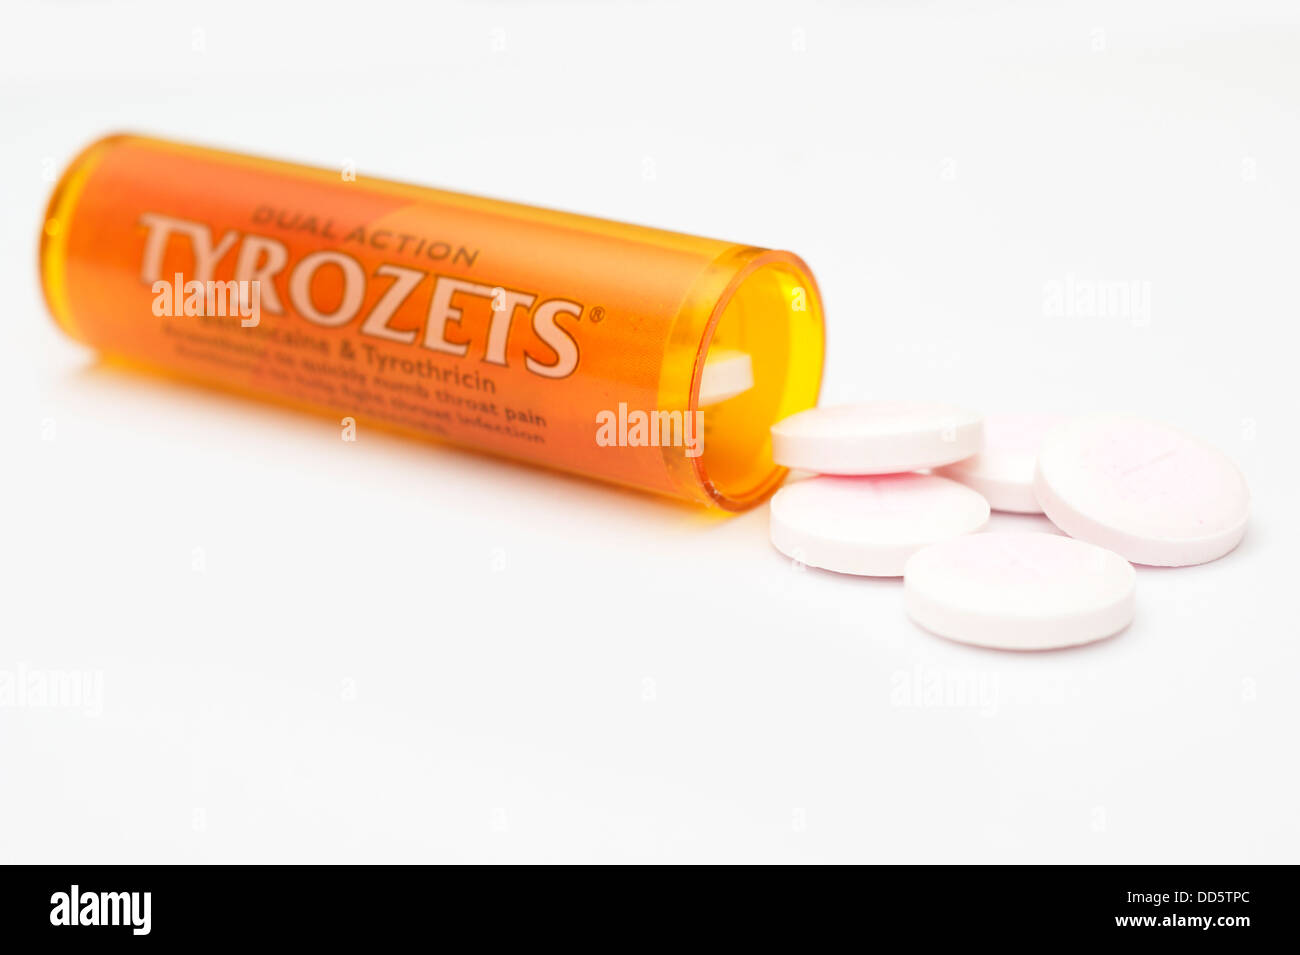 Tyrozets (Tyrothricin Benzocain) Antibiotika Narkose Tabletten Medizin für Infektionen & Irritationen im Mund & Kehle Stockfoto